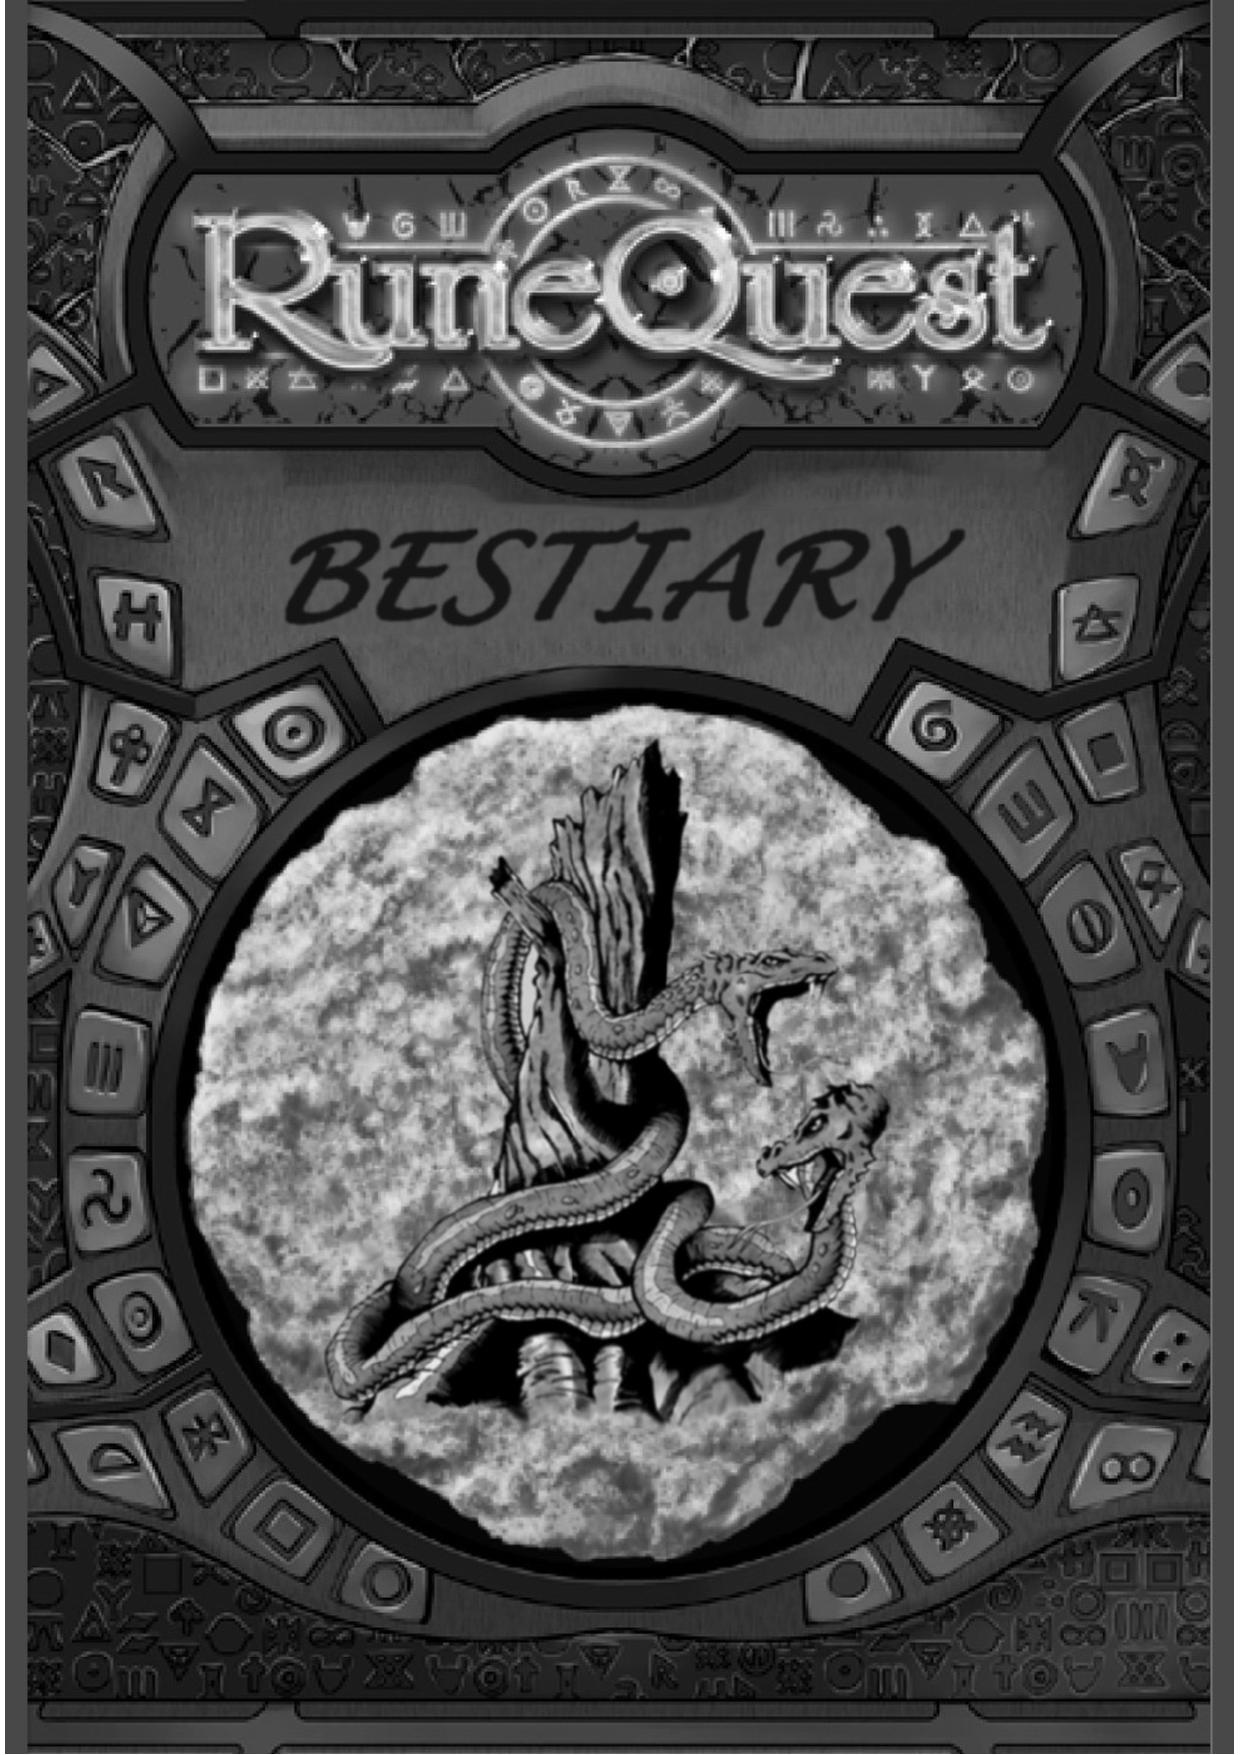 Runequest Bestiary